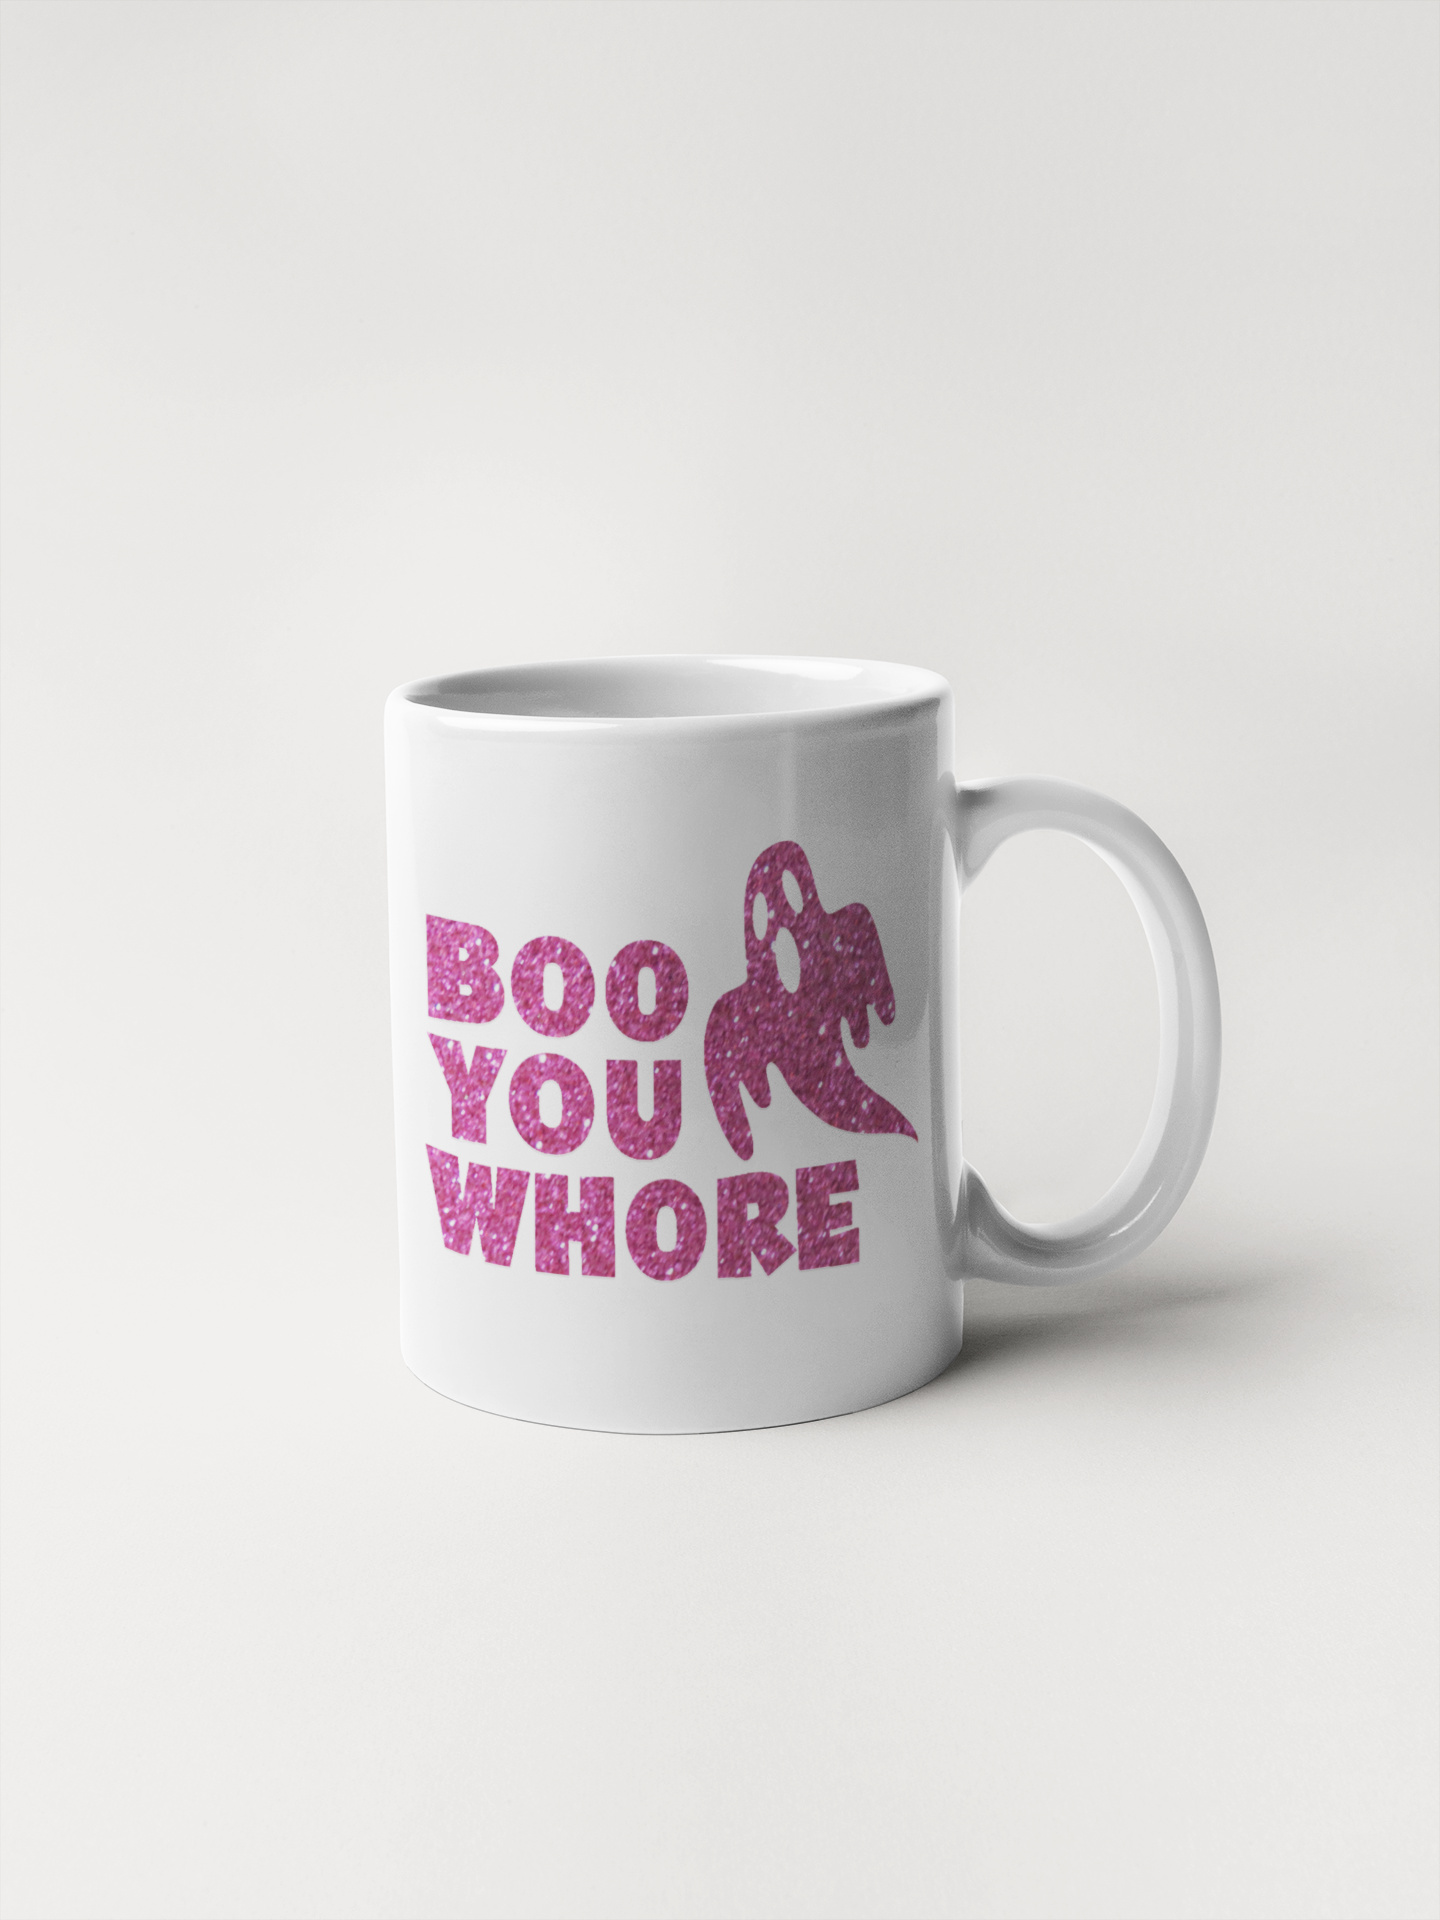 Mean Girls Mug – Snark Gifts